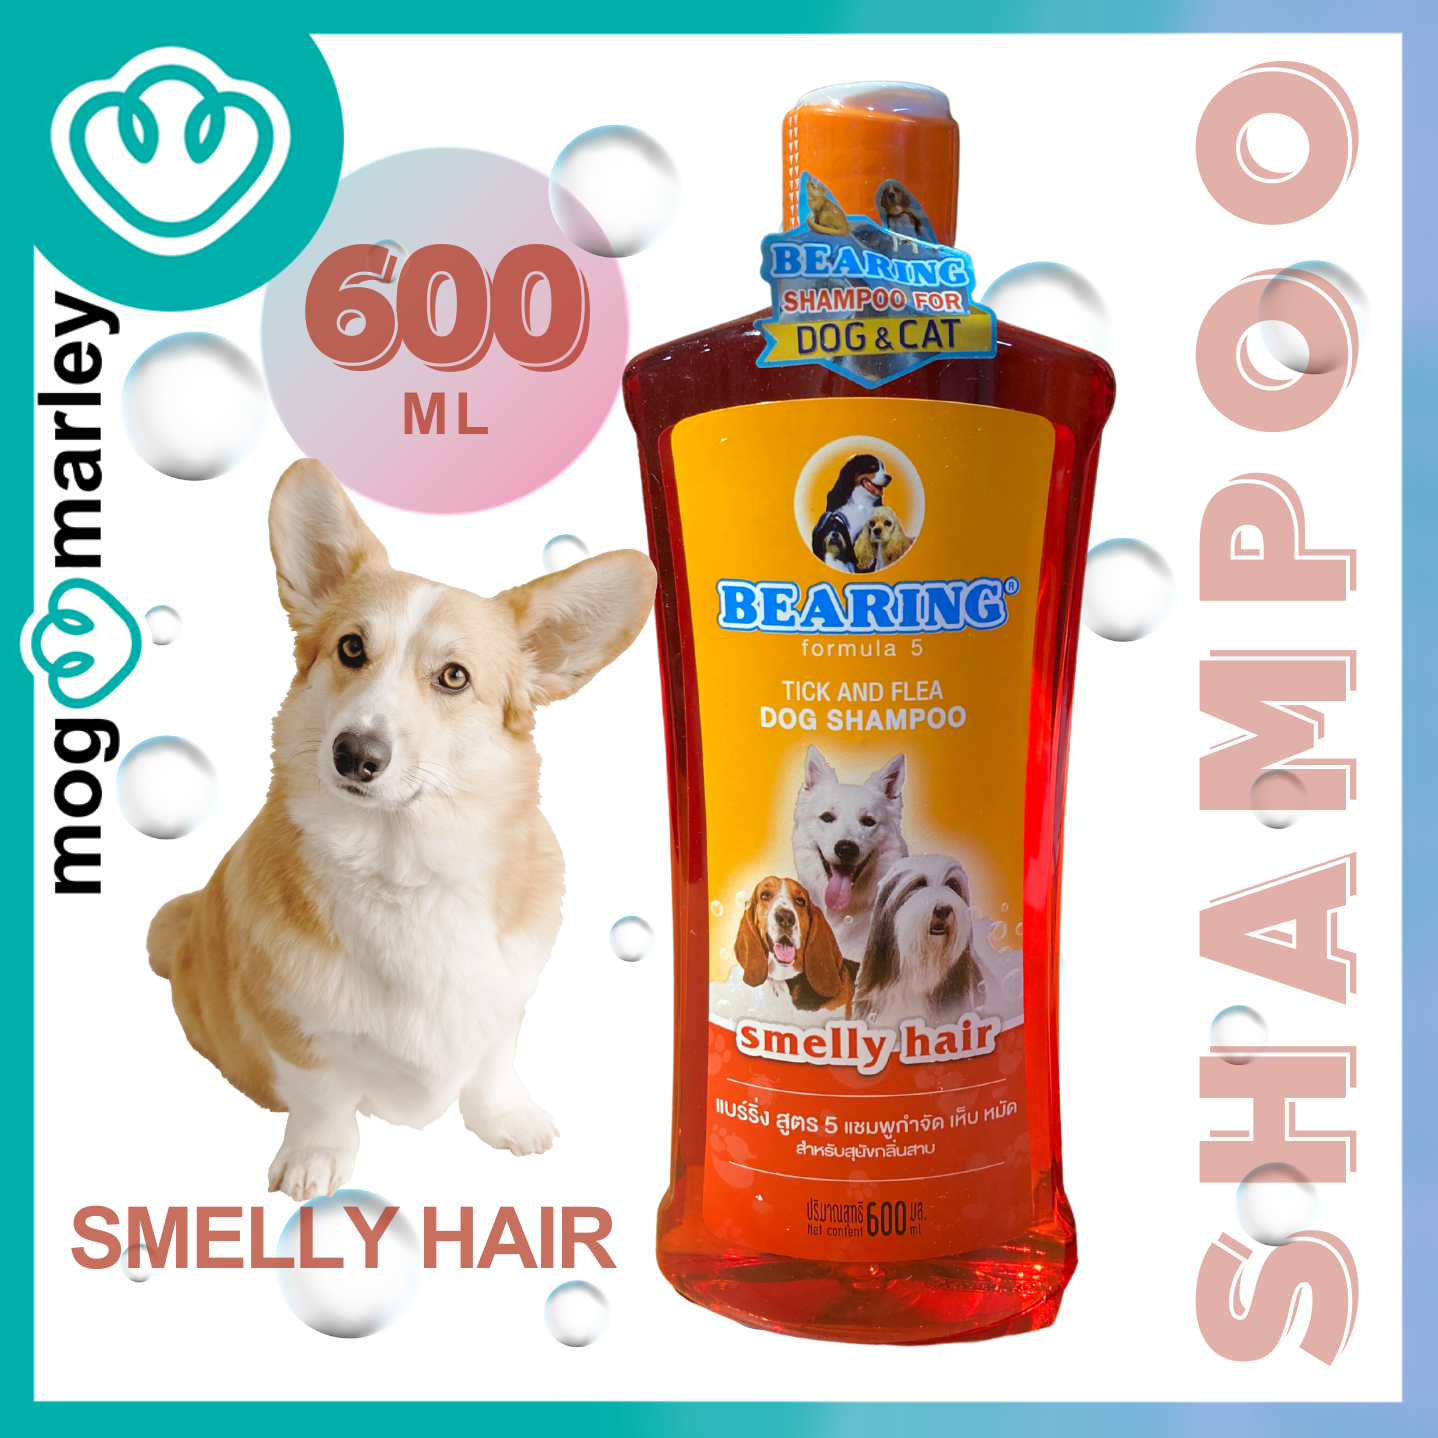 600mL Bearing Formula 5 Tick and Flea Cat and Dog Shampoo Smelly Hair  -mog and marley